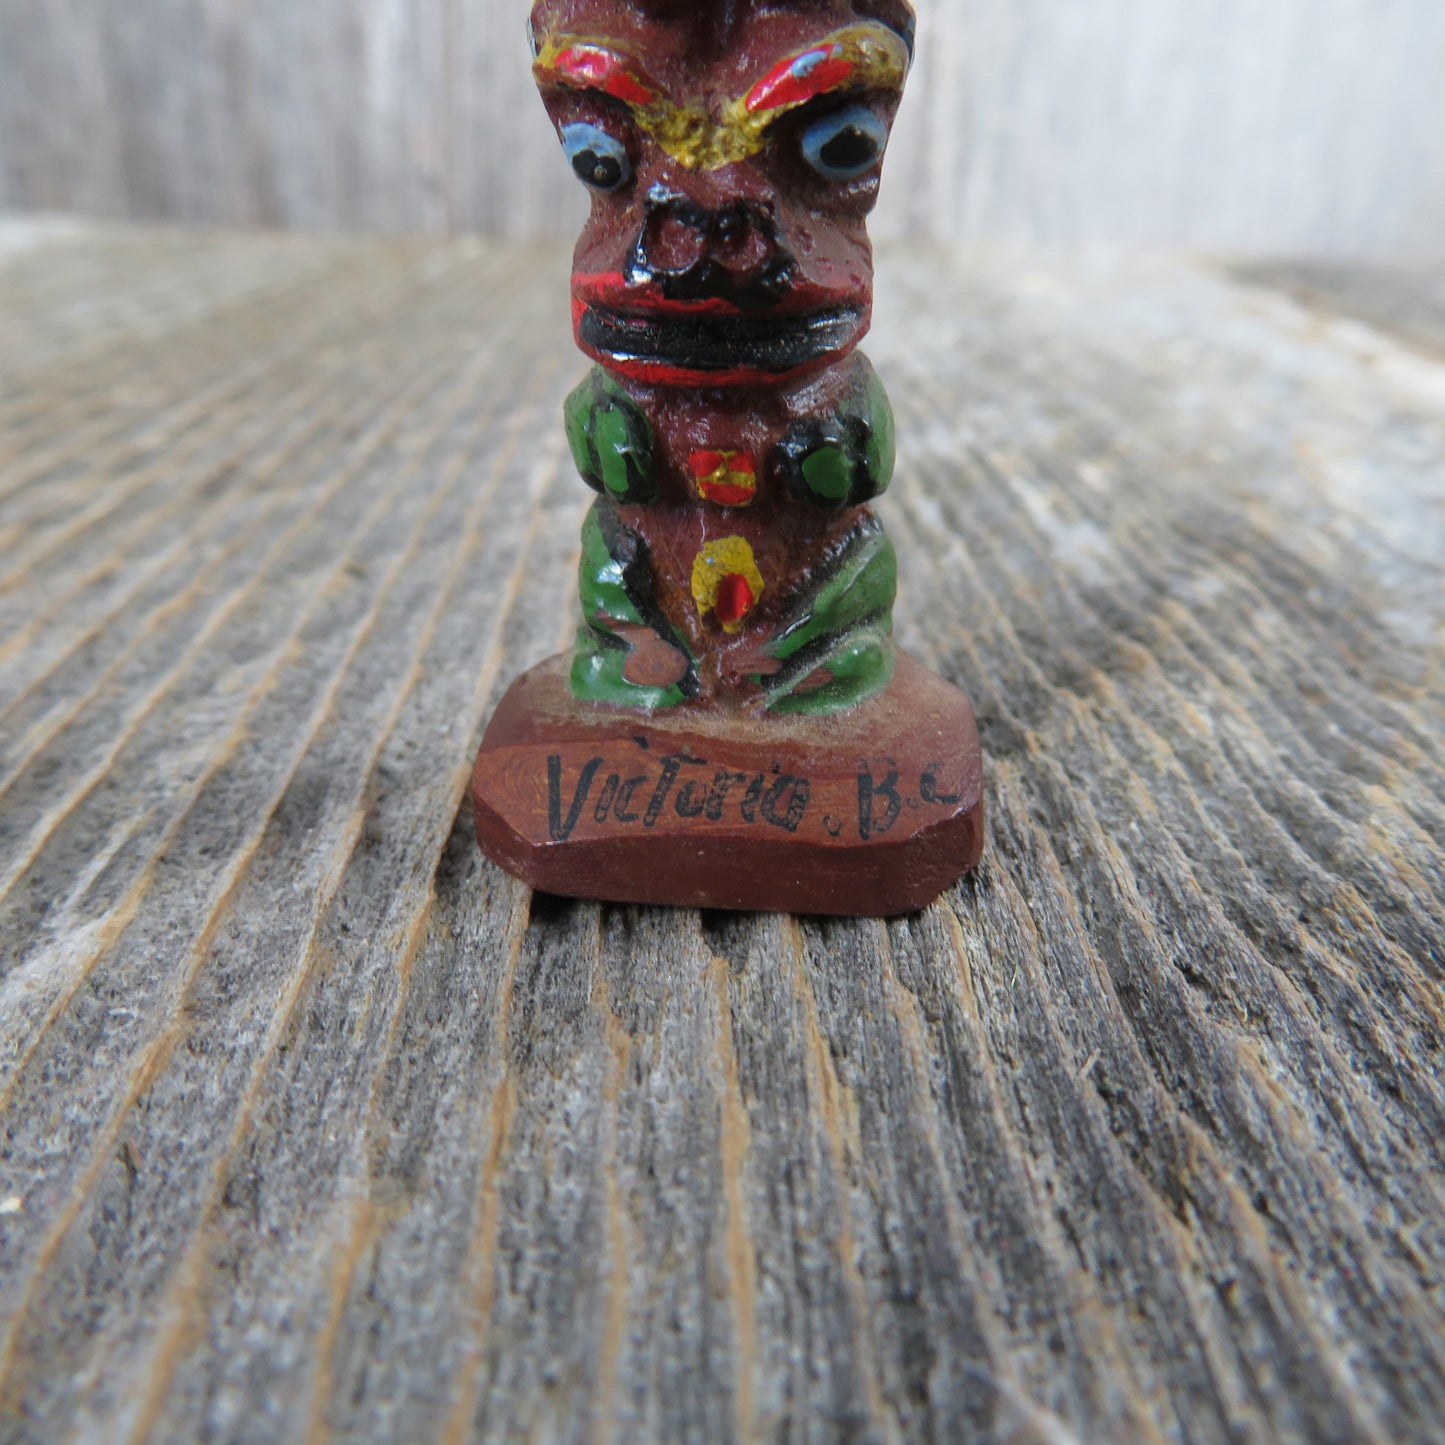 Vintage Totem Pole Wooden Figurine Thunderbird Park Victoria British Columbia Canada Hand Painted Miniature